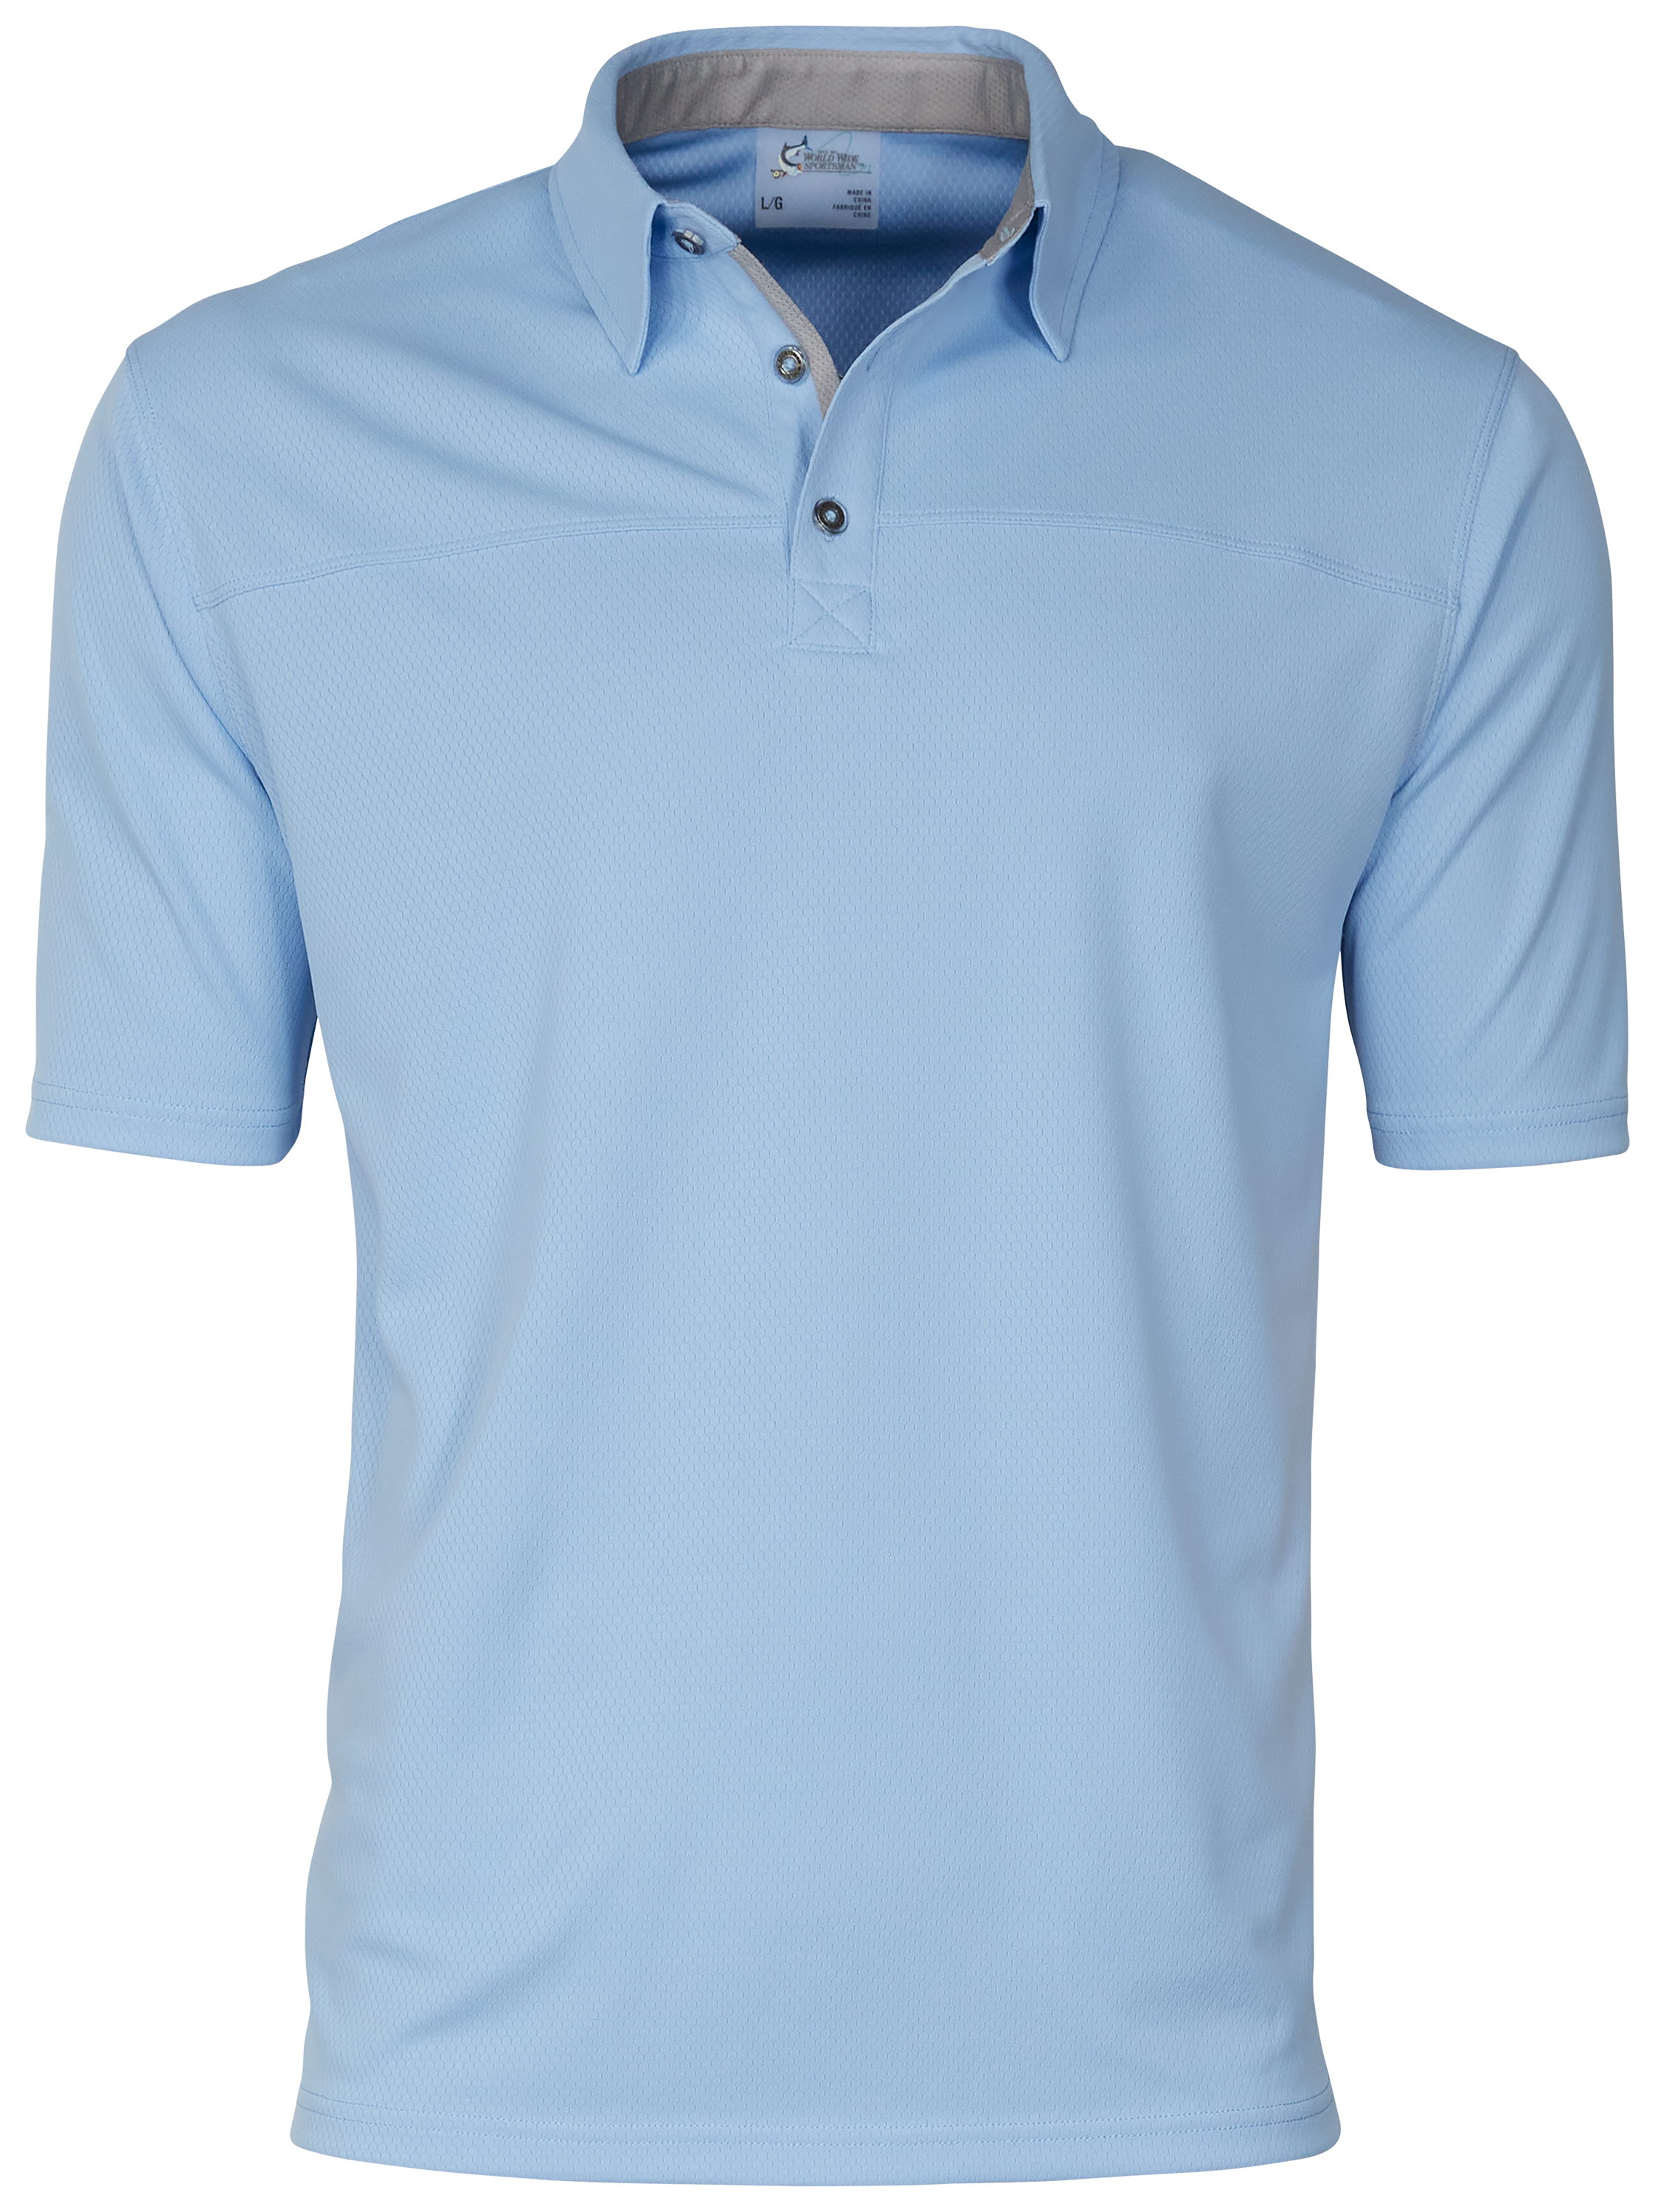 World Wide Sportsman Short-Sleeve Polo for Men - Placid Blue - S